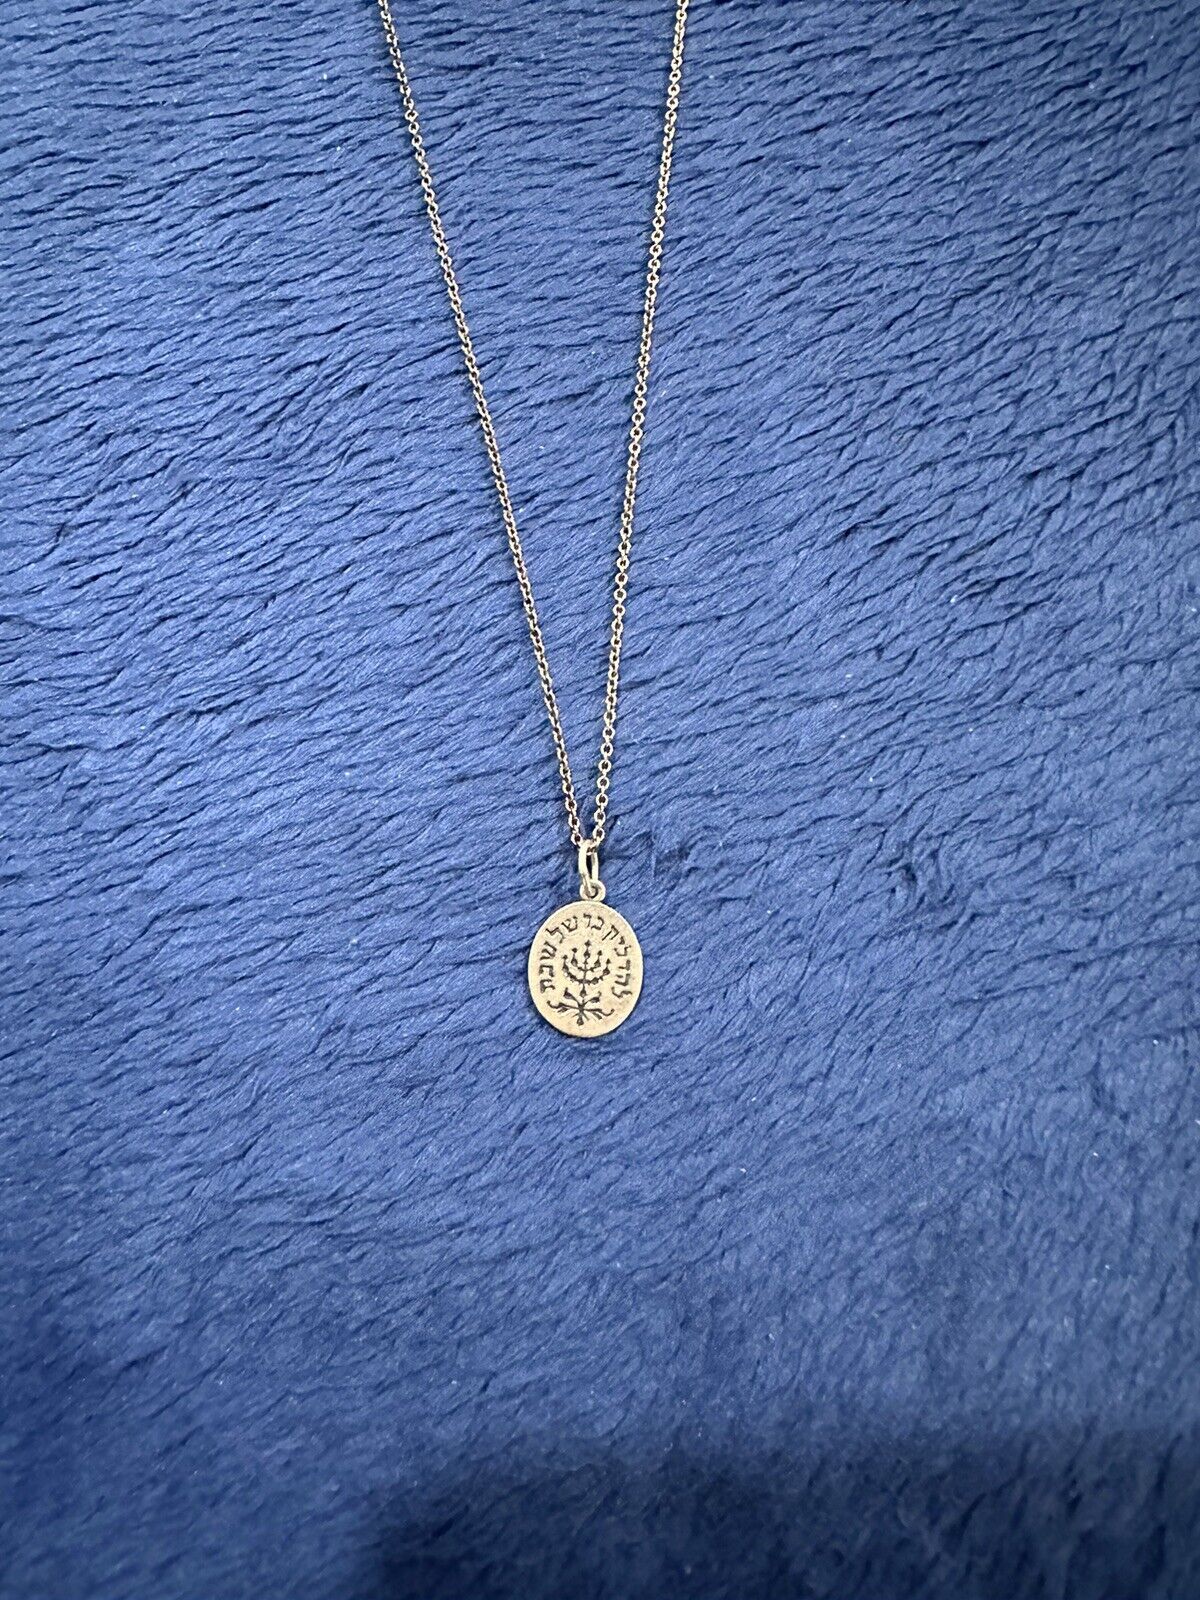 Sterling Silver 925 Hebrew Jewish Judaica Pendant Necklace, 18”